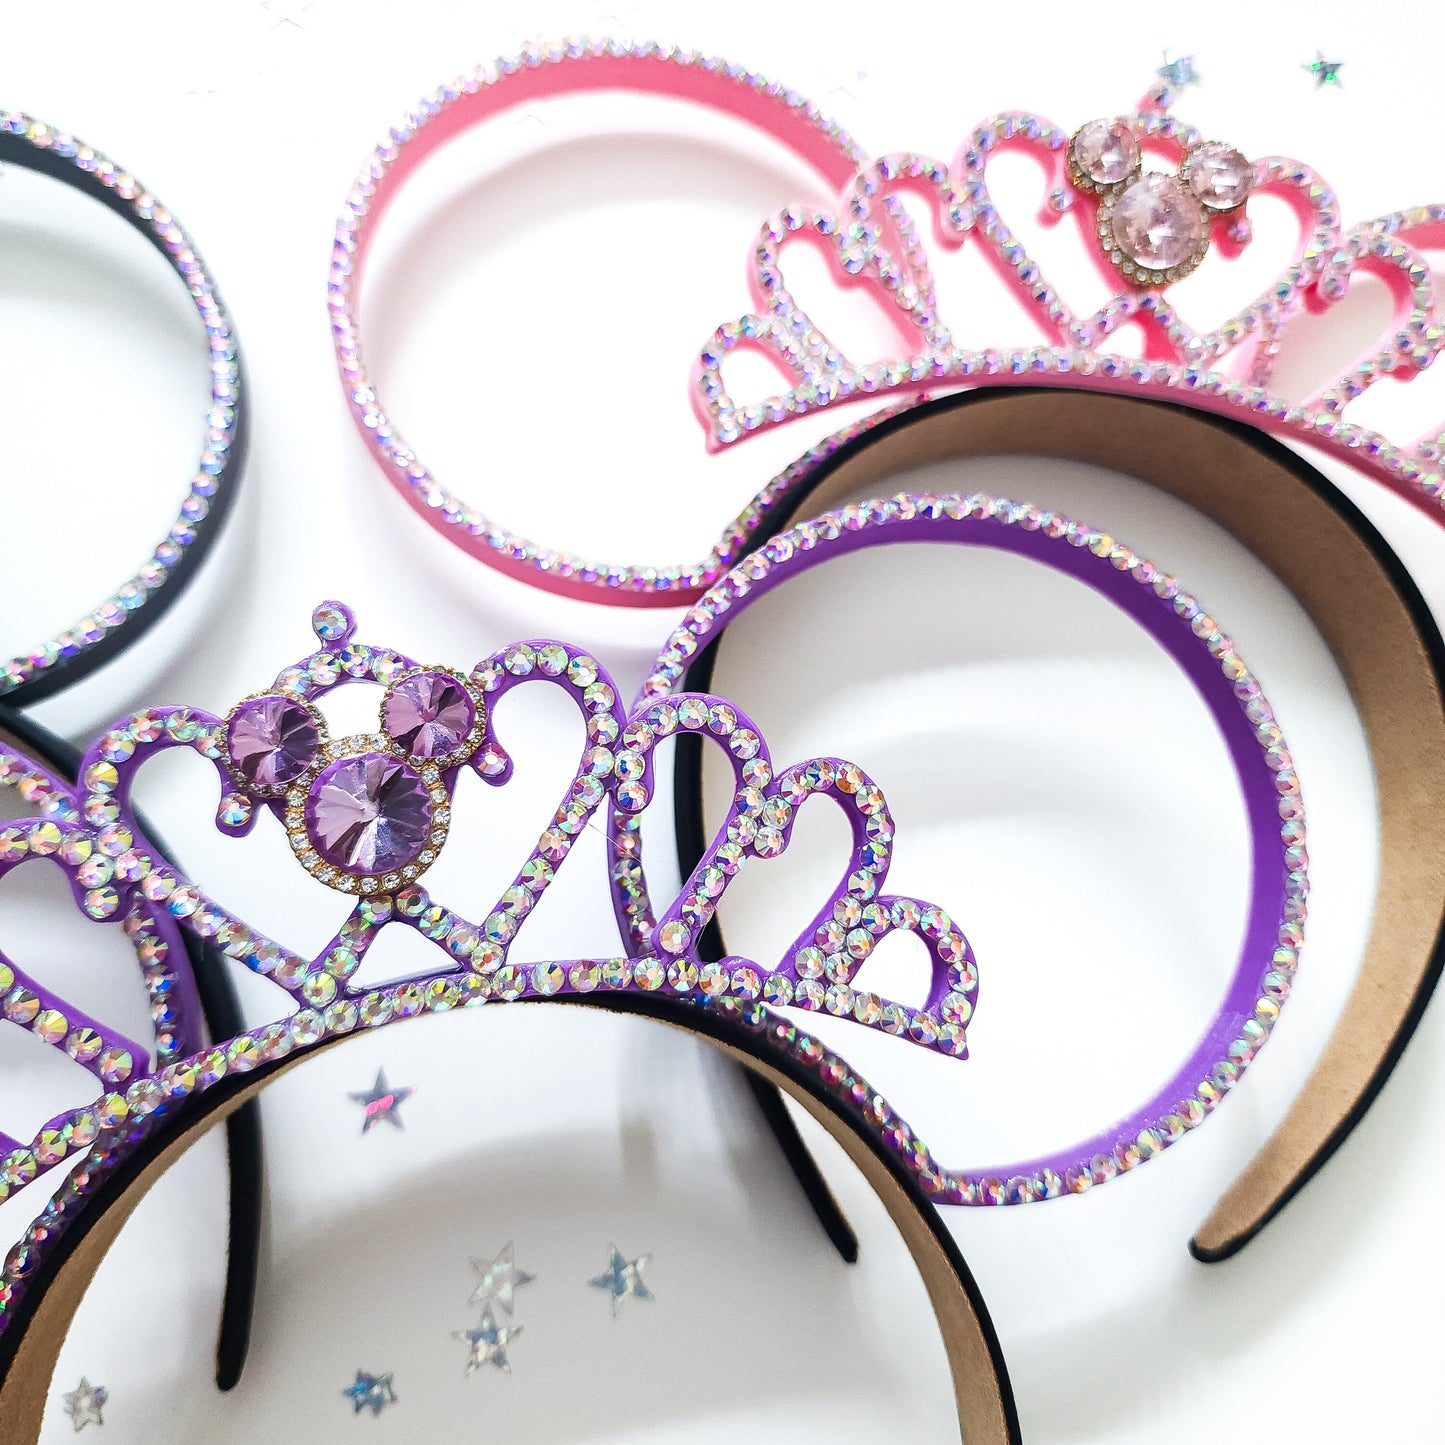 Mouse tiara Ab Rhinestone crown with 3d Rhinestone ears. Your choice of silver, pink, or purple tiara